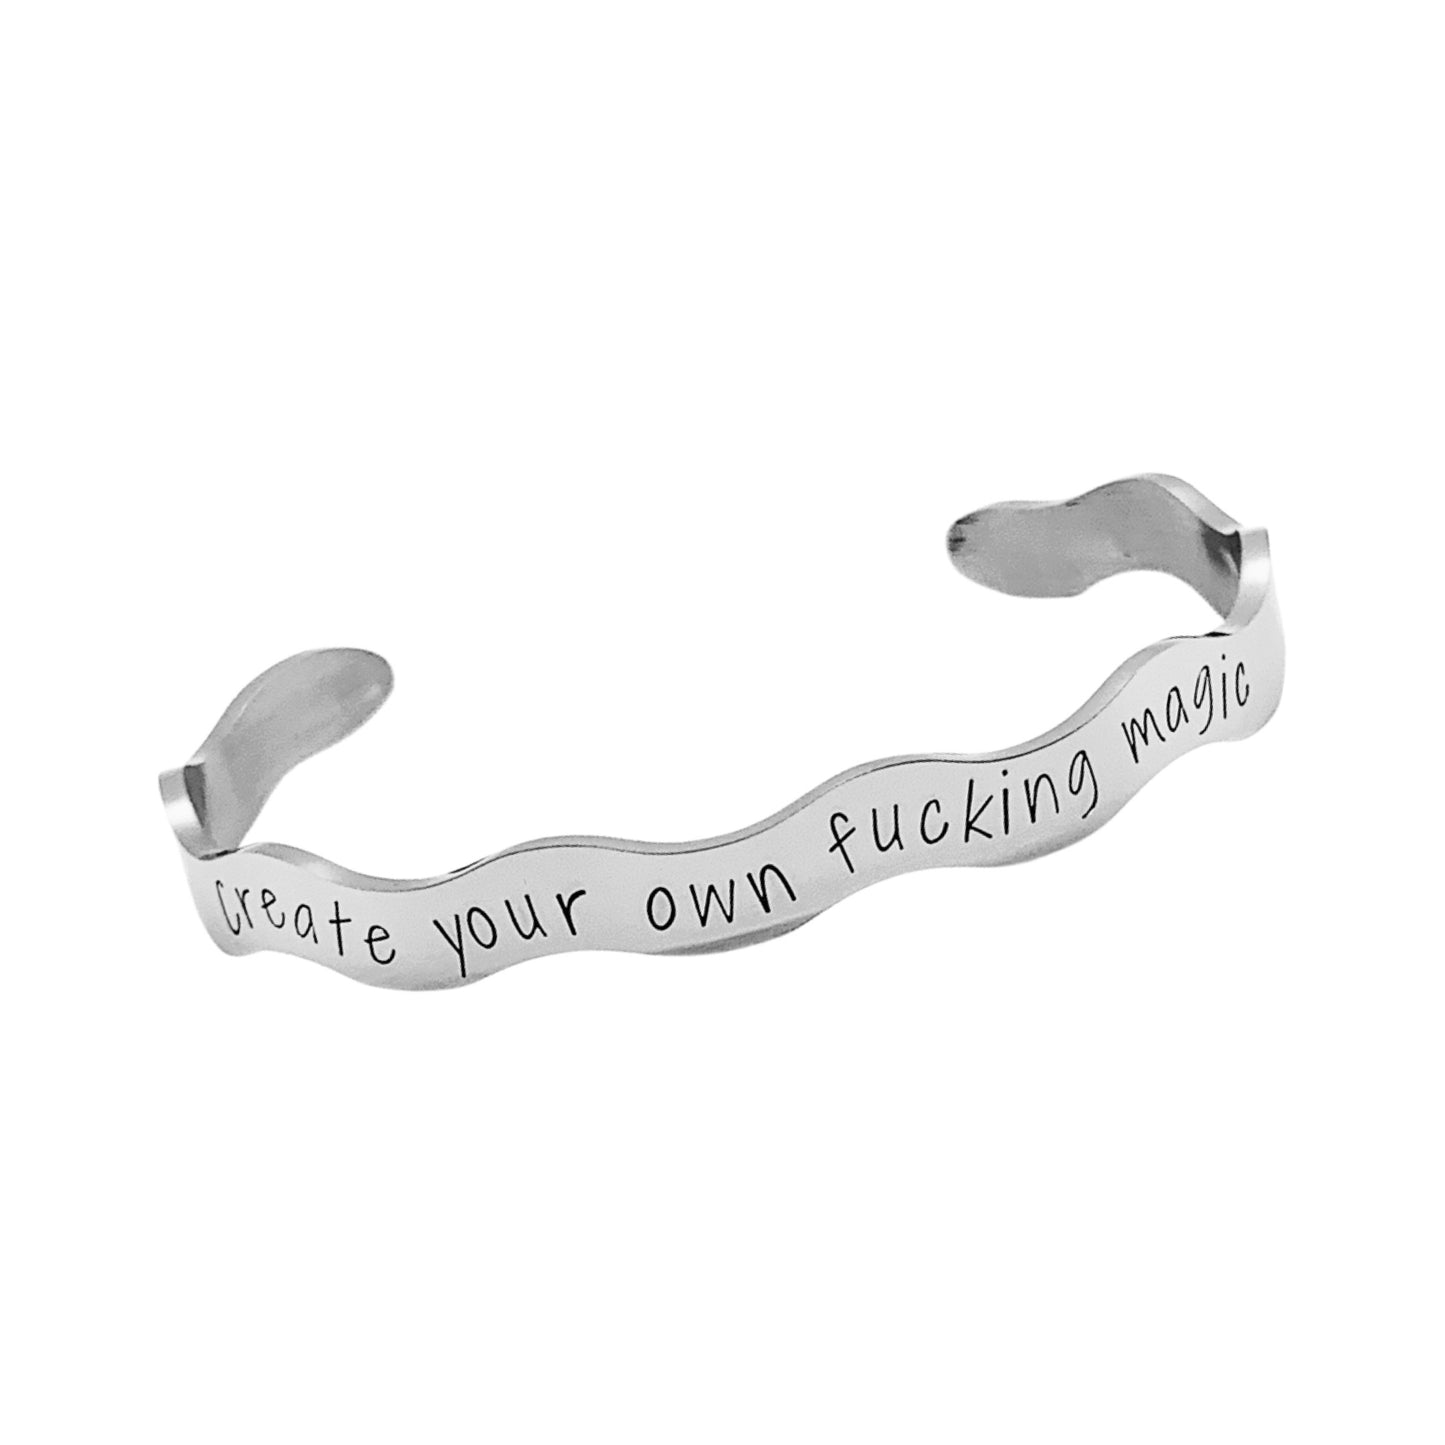 Create your own f*cking magic - Cuff Bracelet